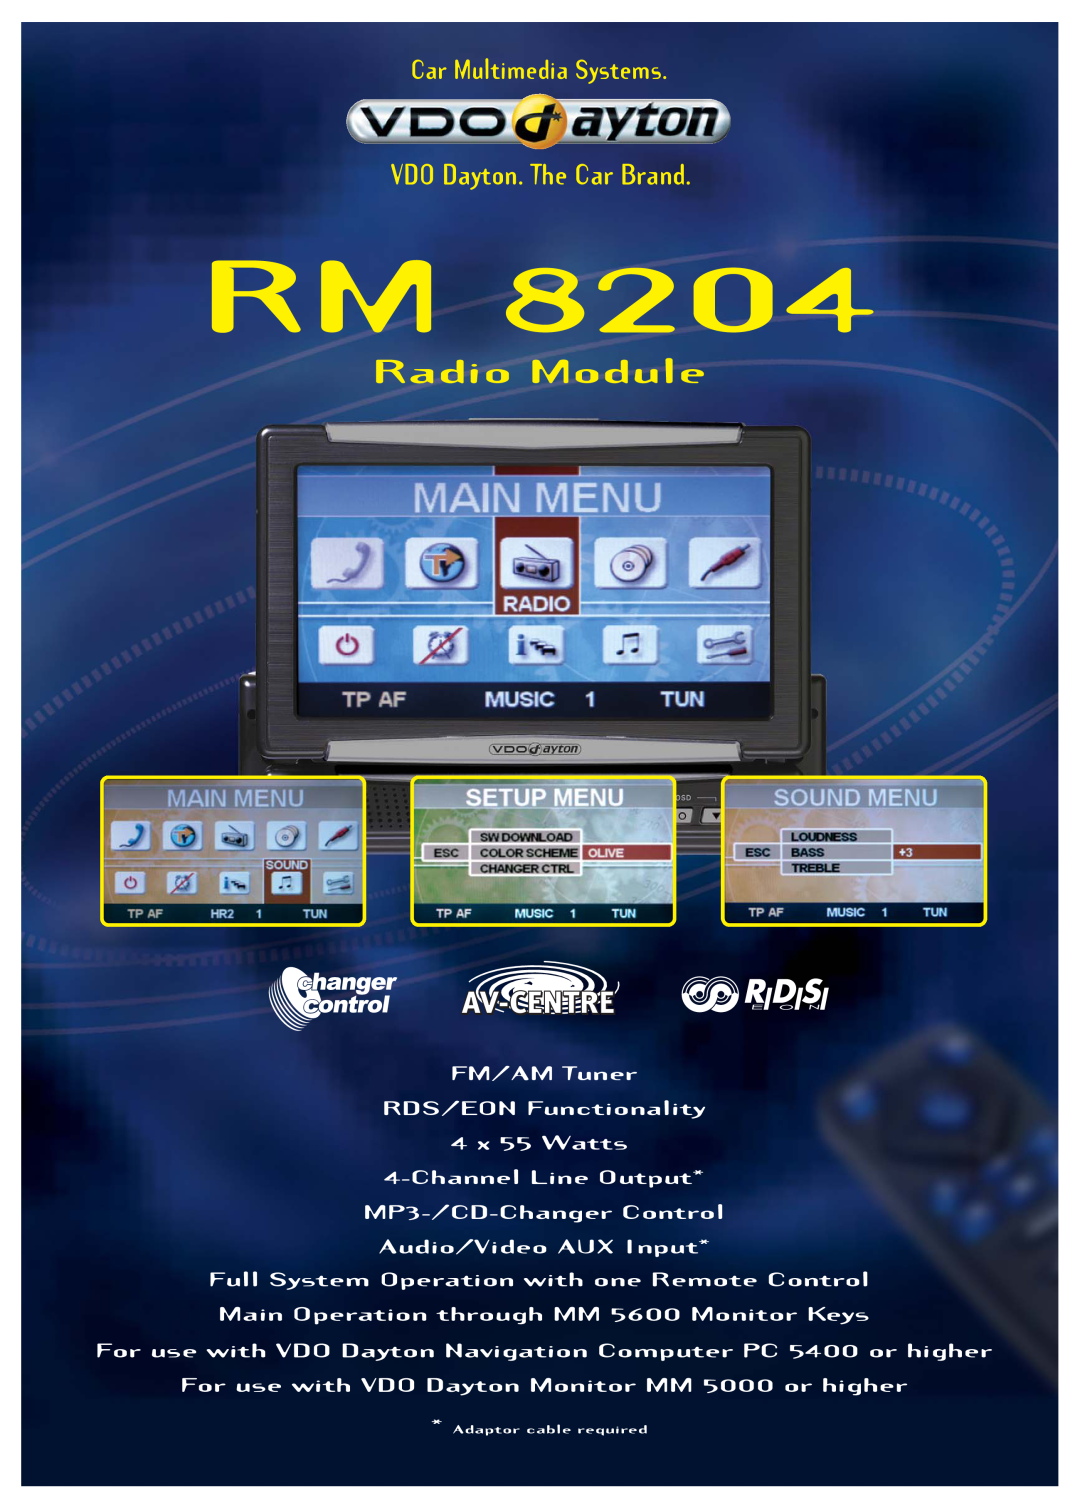 VDO Dayton RM 8204 manual Av-Centre, Radio Module, VDO Dayton. The Car Brand, Car Multimedia Systems 